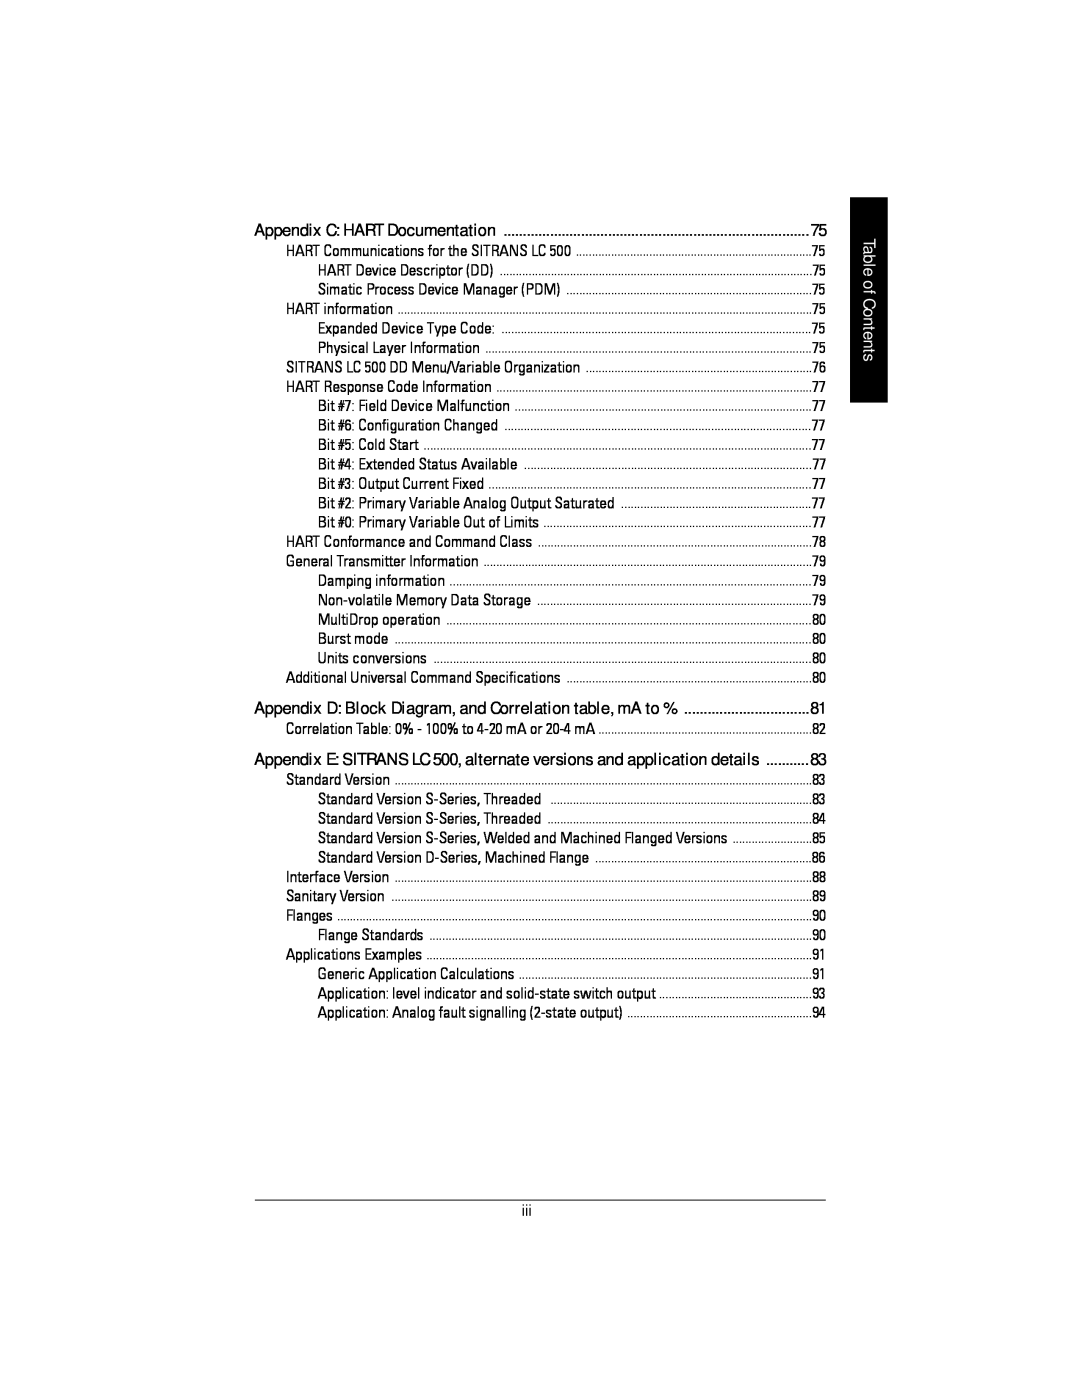 Siemens Sitrans Table of Contents, Appendix D Block Diagram, and Correlation table, mA to %, Appendix C HART Documentation 